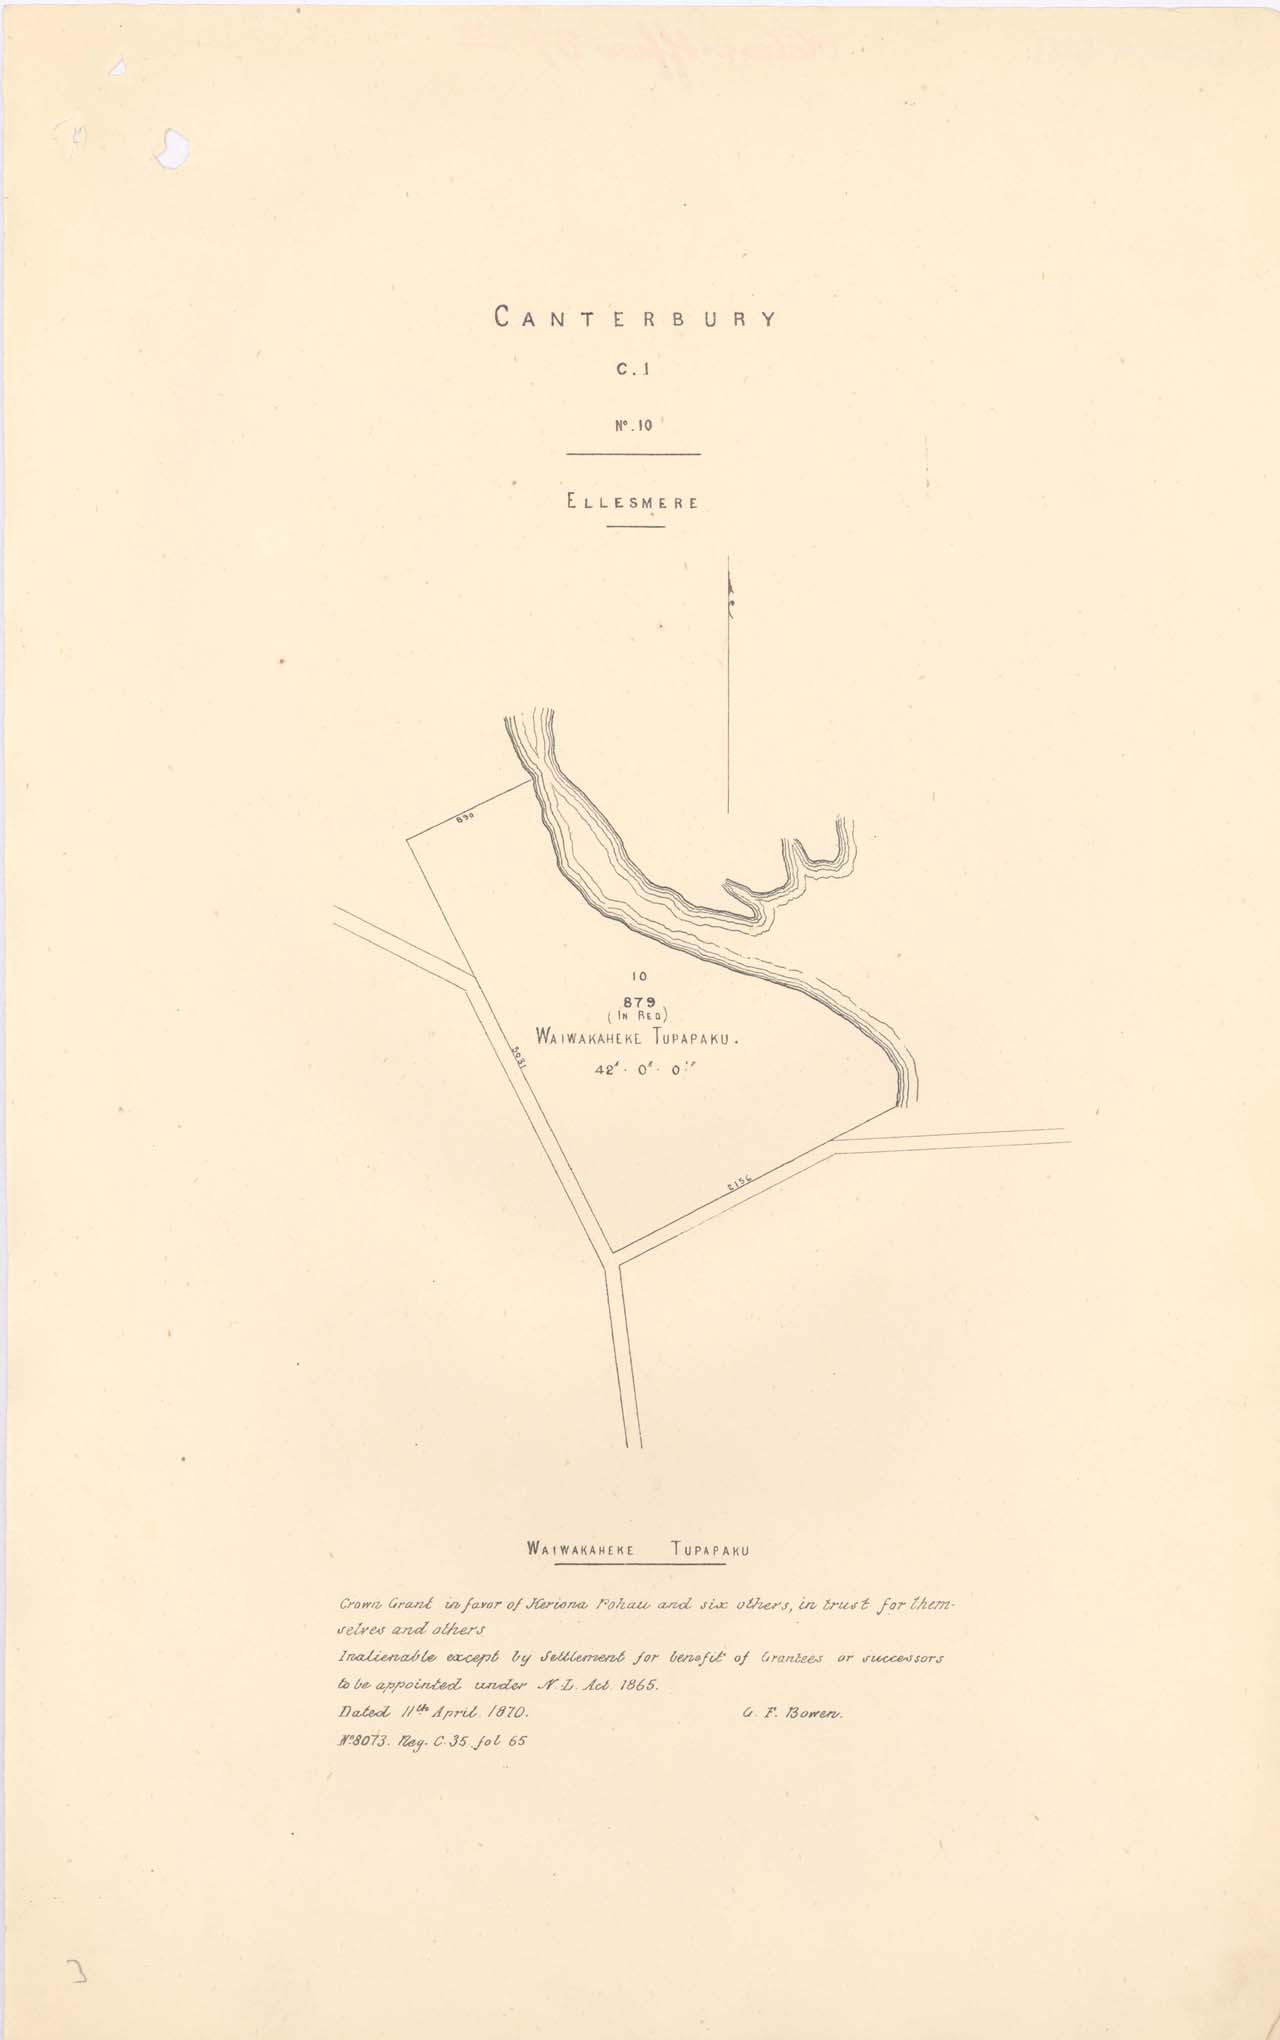 Reserve 879 - Waiwakaheke Tupapaku - Ellesmere - 1870